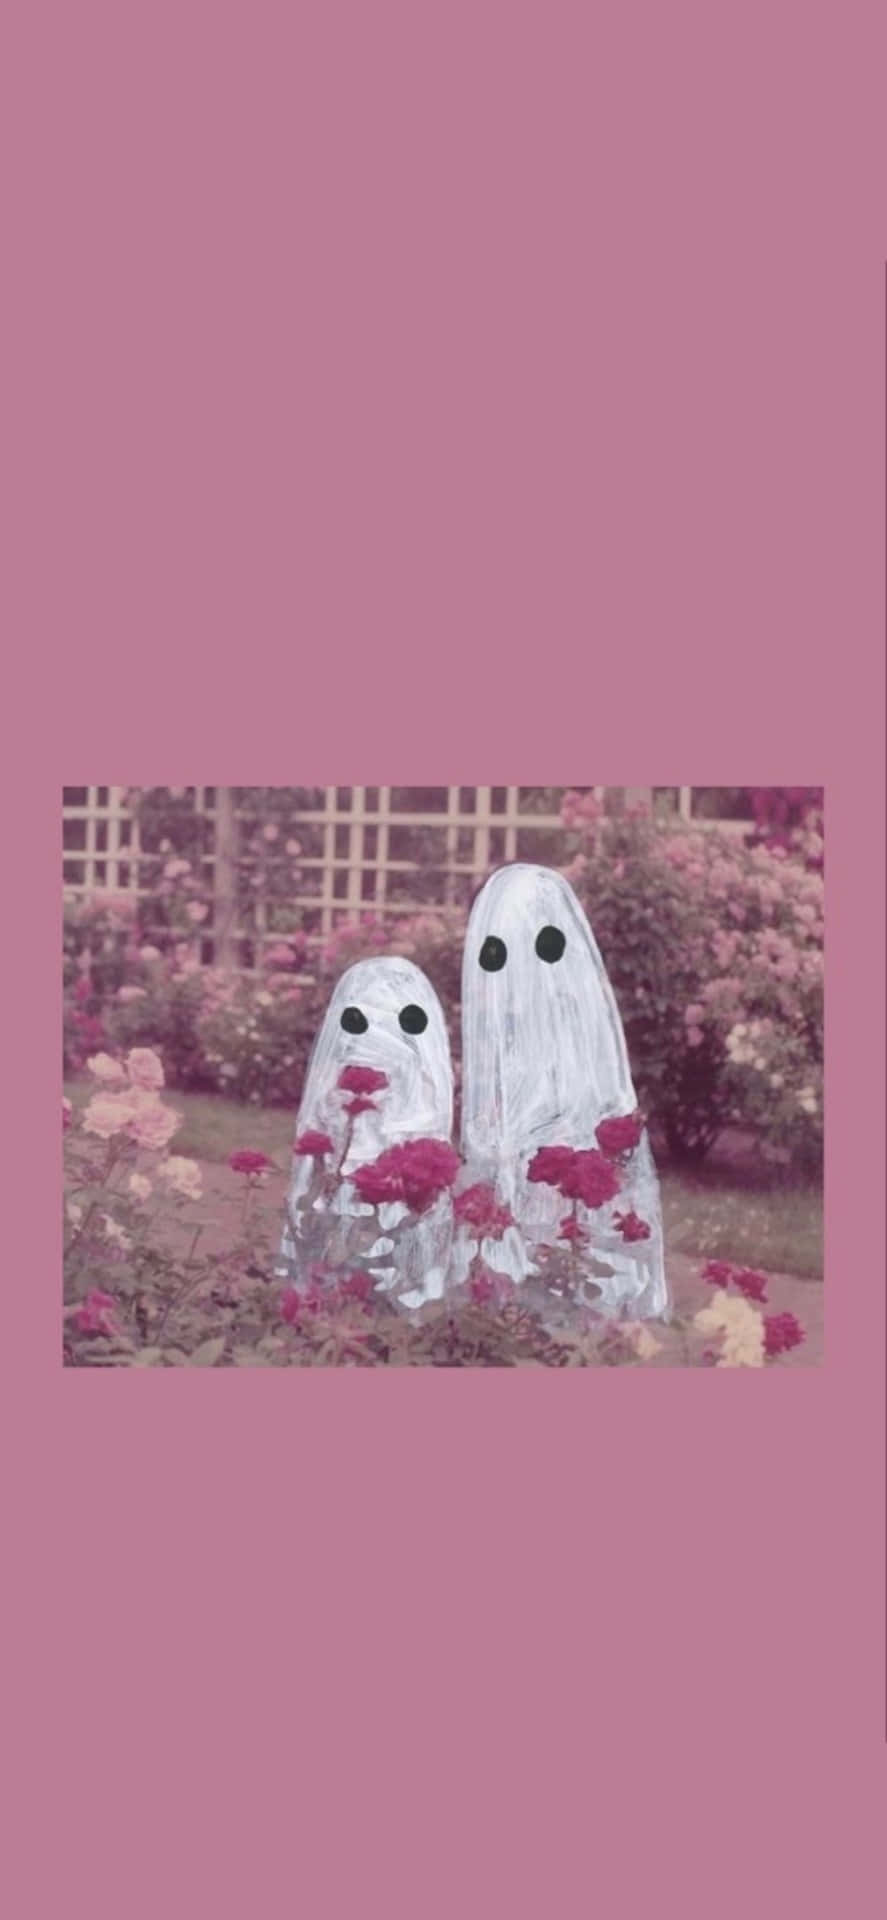 Pink Ghostly Halloween Garden.jpg Wallpaper